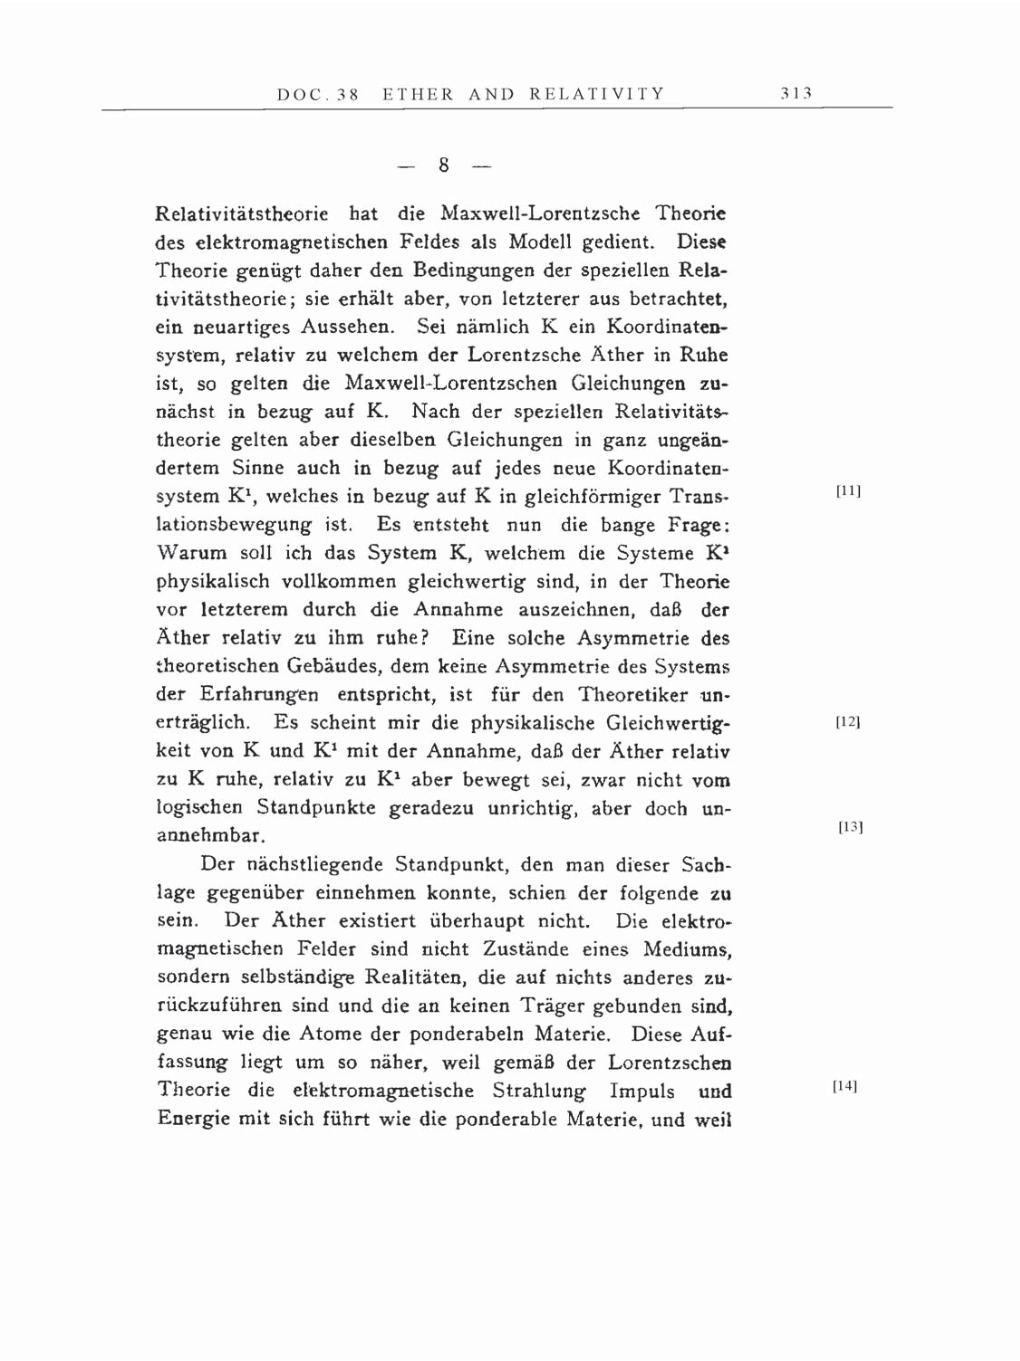 Volume 7: The Berlin Years: Writings, 1918-1921 page 313